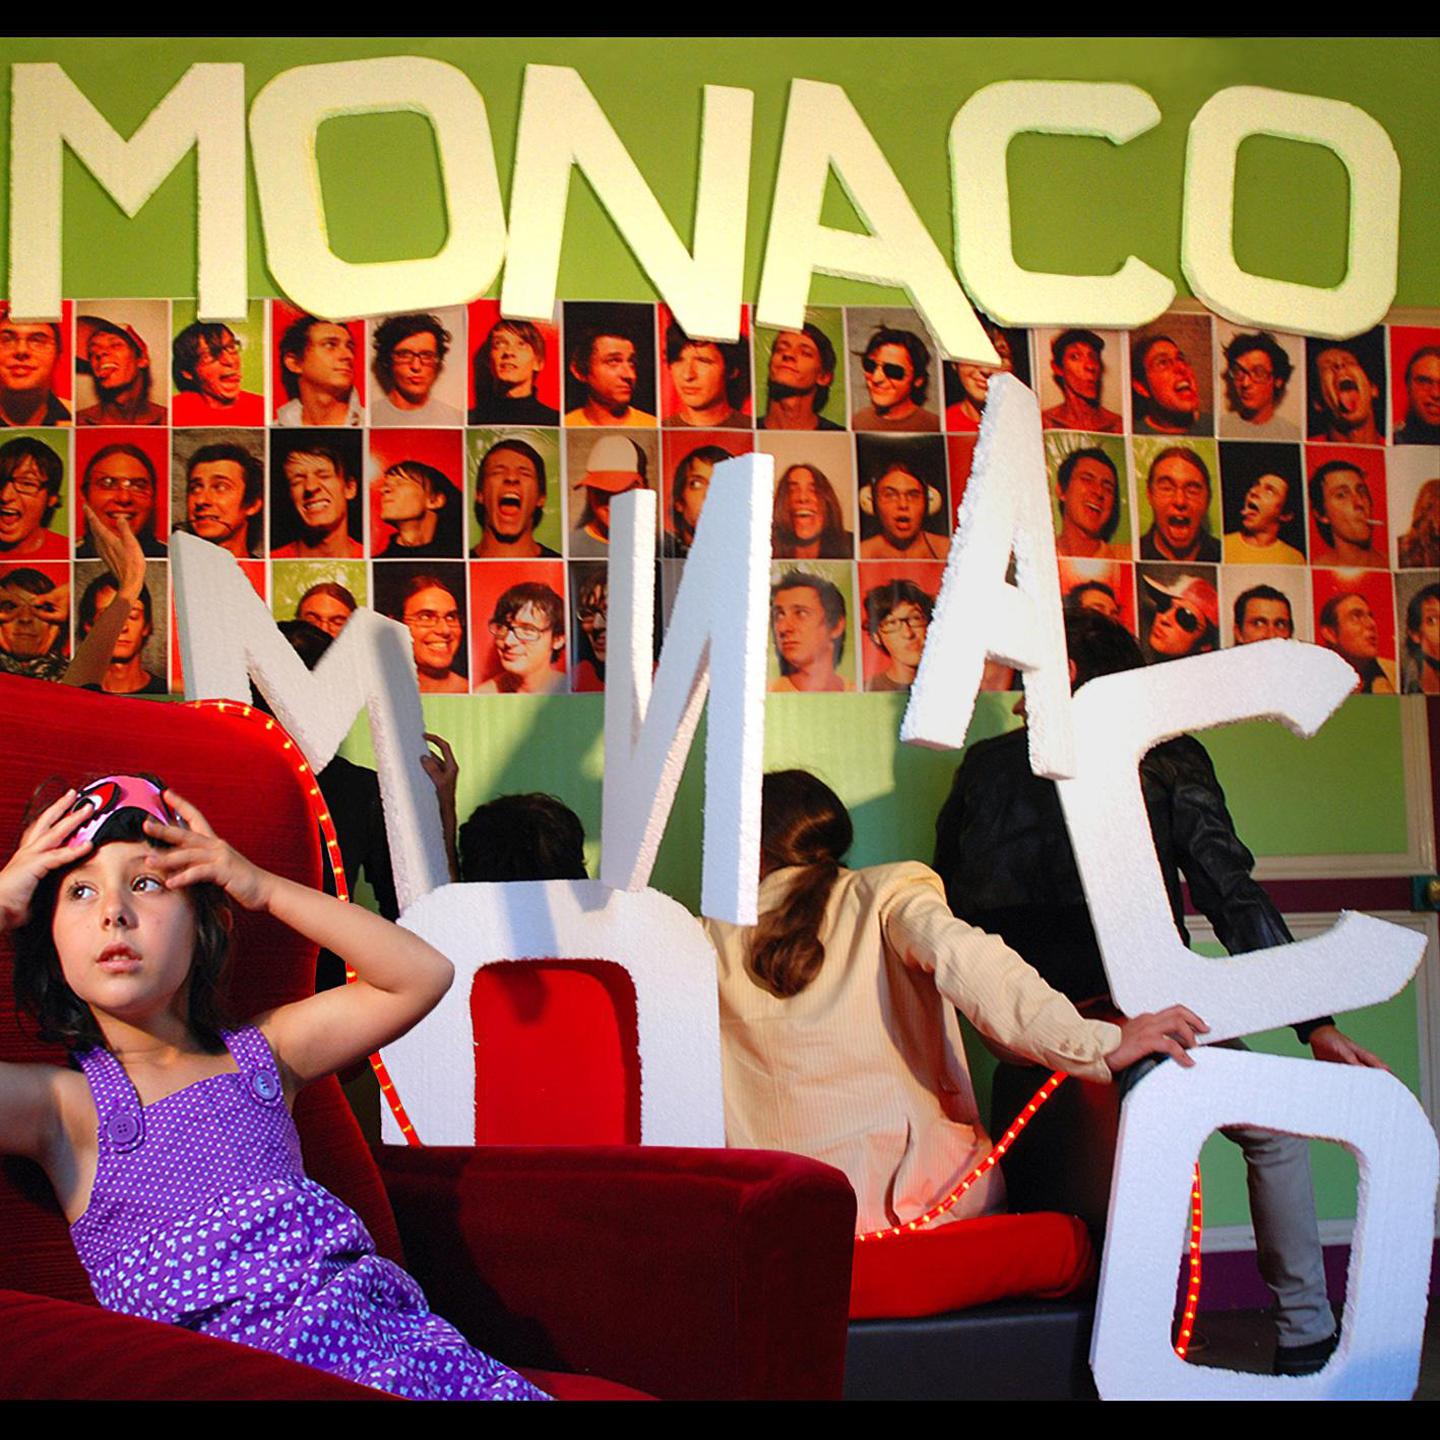 Монако песня. Картинки дискография Монако. Фото песни Монако. Монако слушать. Зачем монако песня слушать